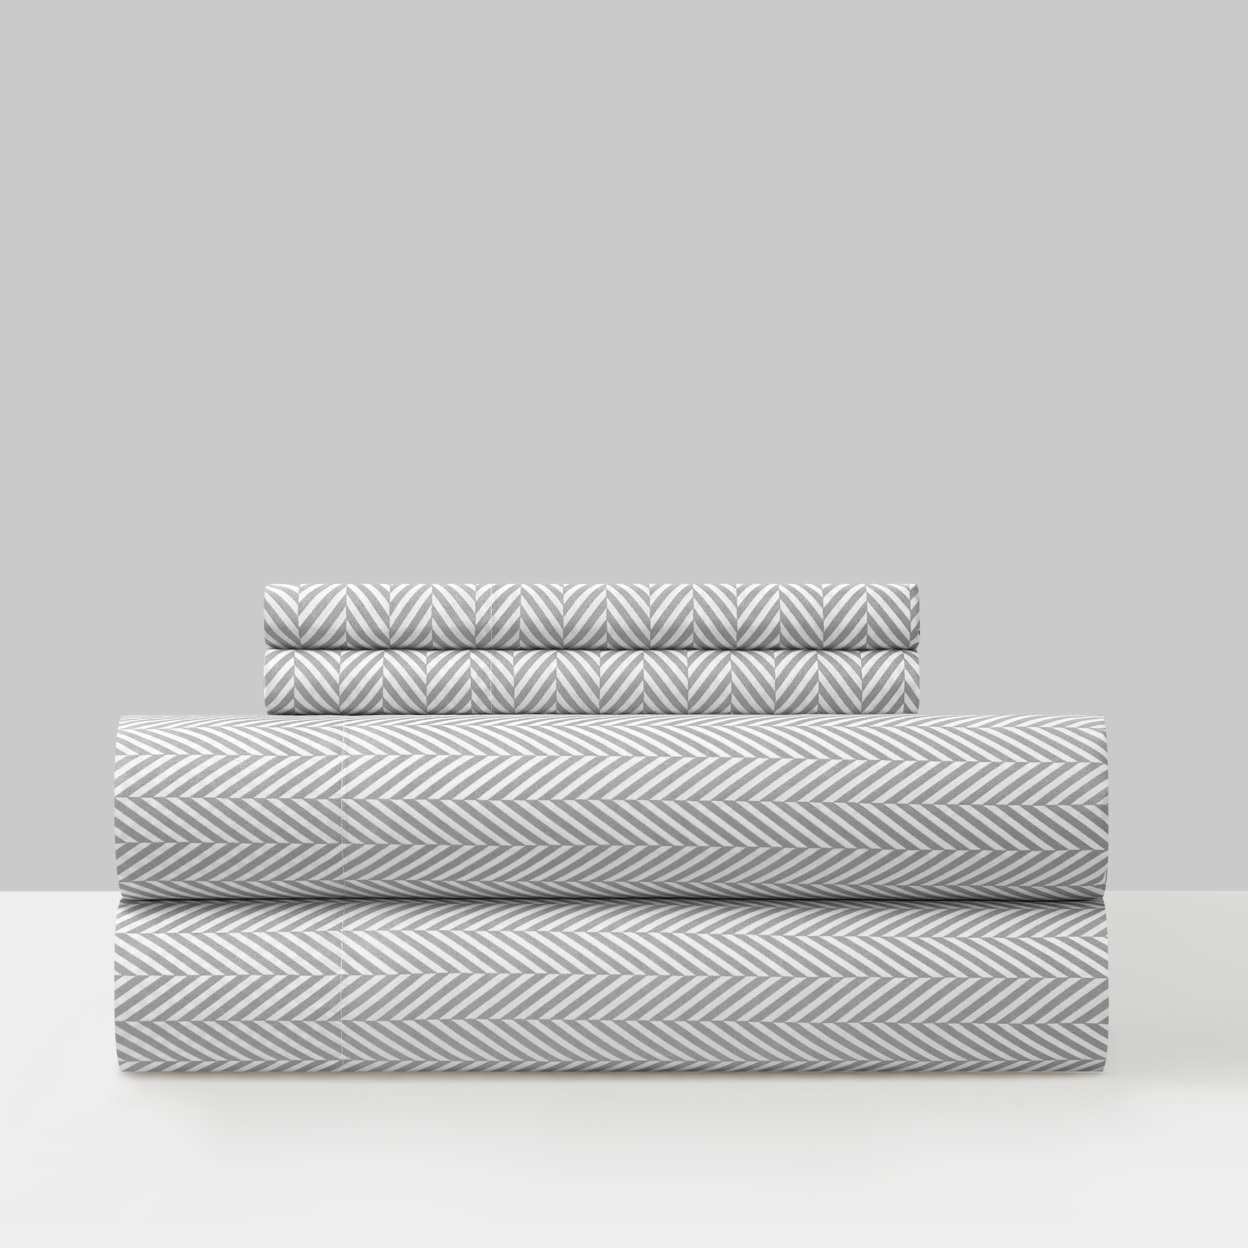 Enise 3 Or 4 Piece Sheet Set Super Soft Graphic Herringbone Print Design - Grey, Twin